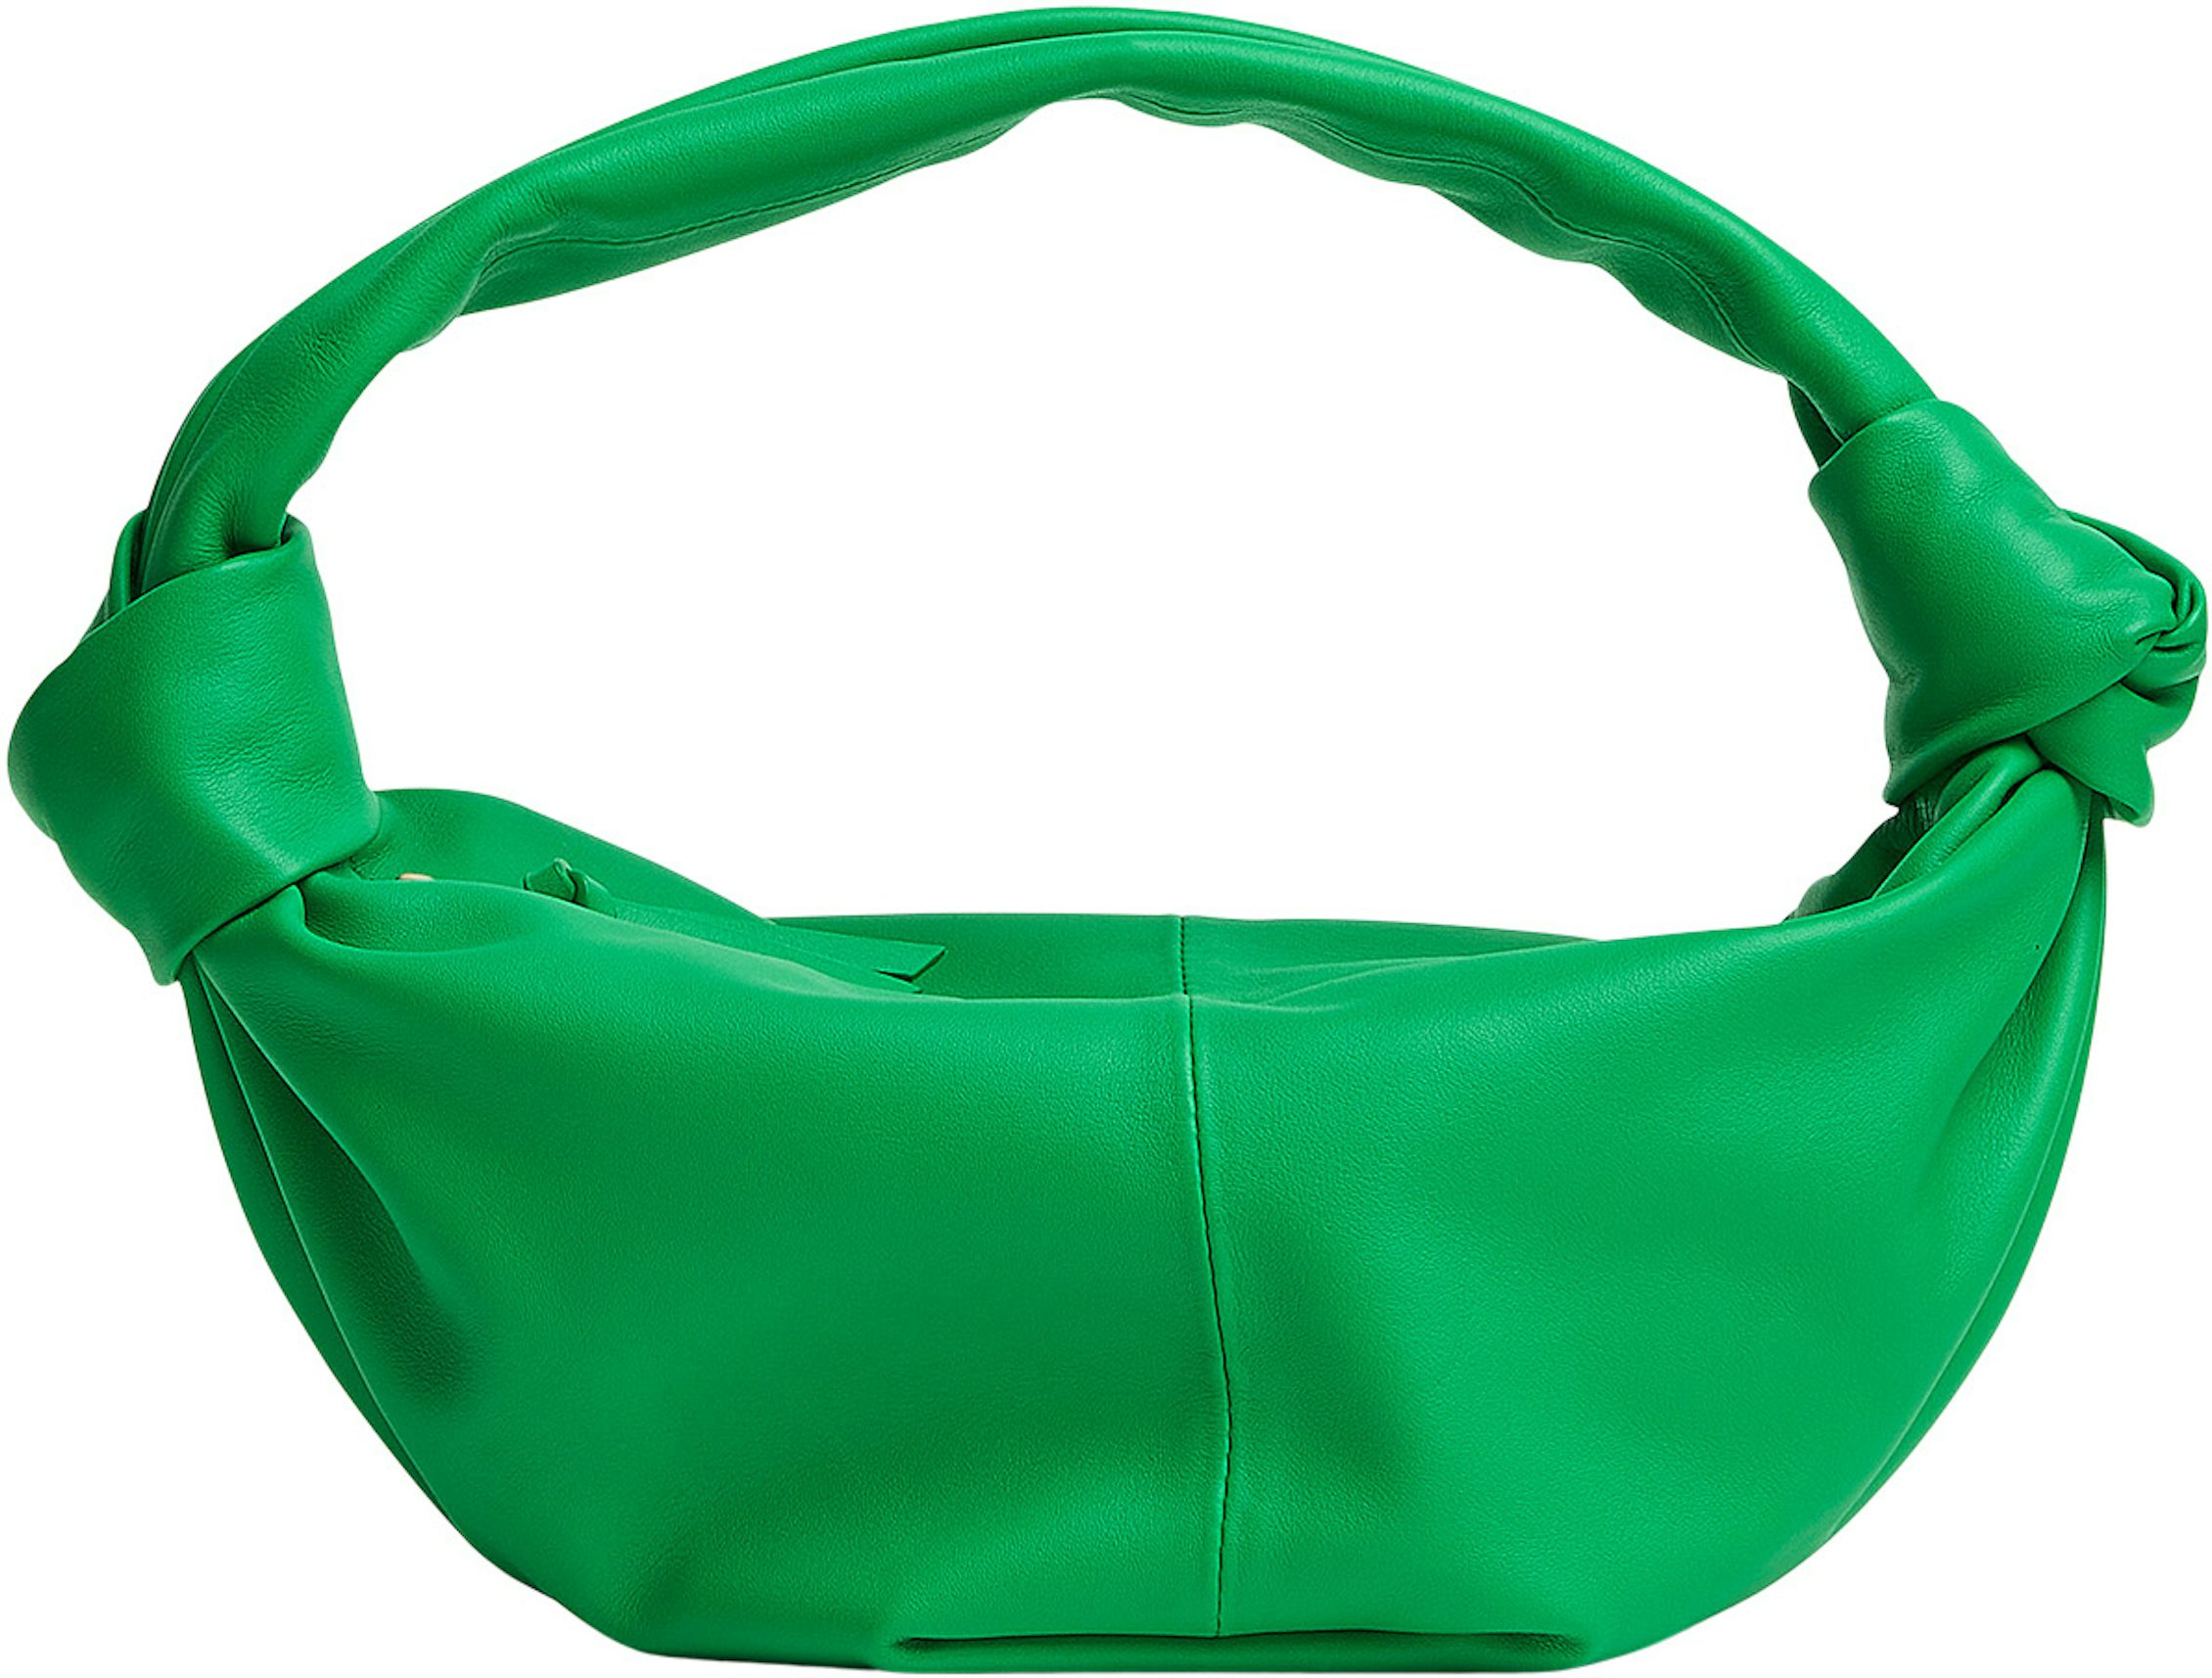 Knot Leather Shoulder Bag in Green - Bottega Veneta